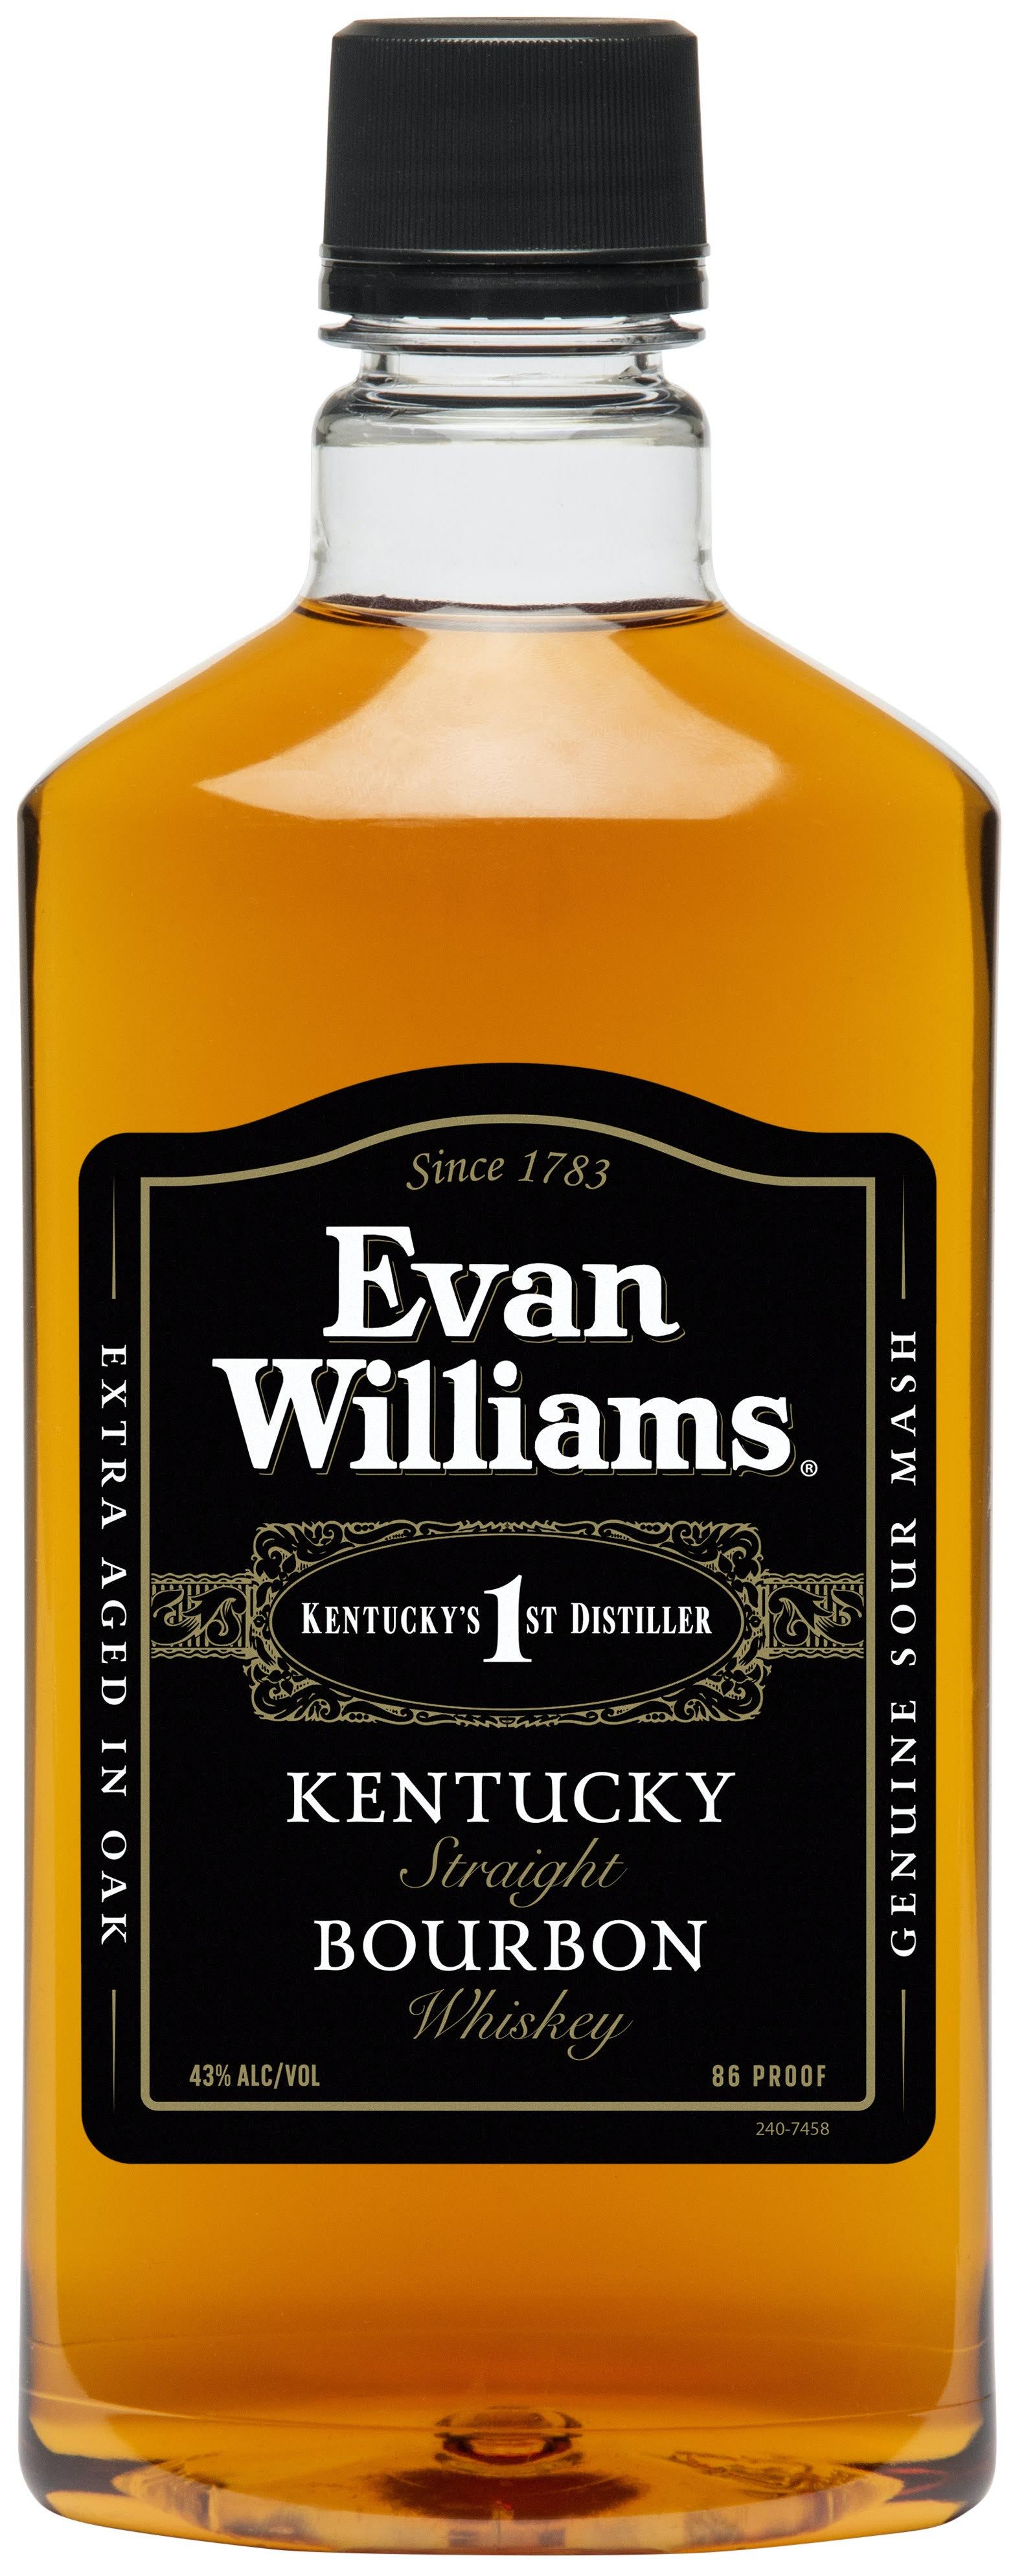 Evan Williams Whiskey, Kentucky Straight Bourbon, Carry Pack - 750 ml